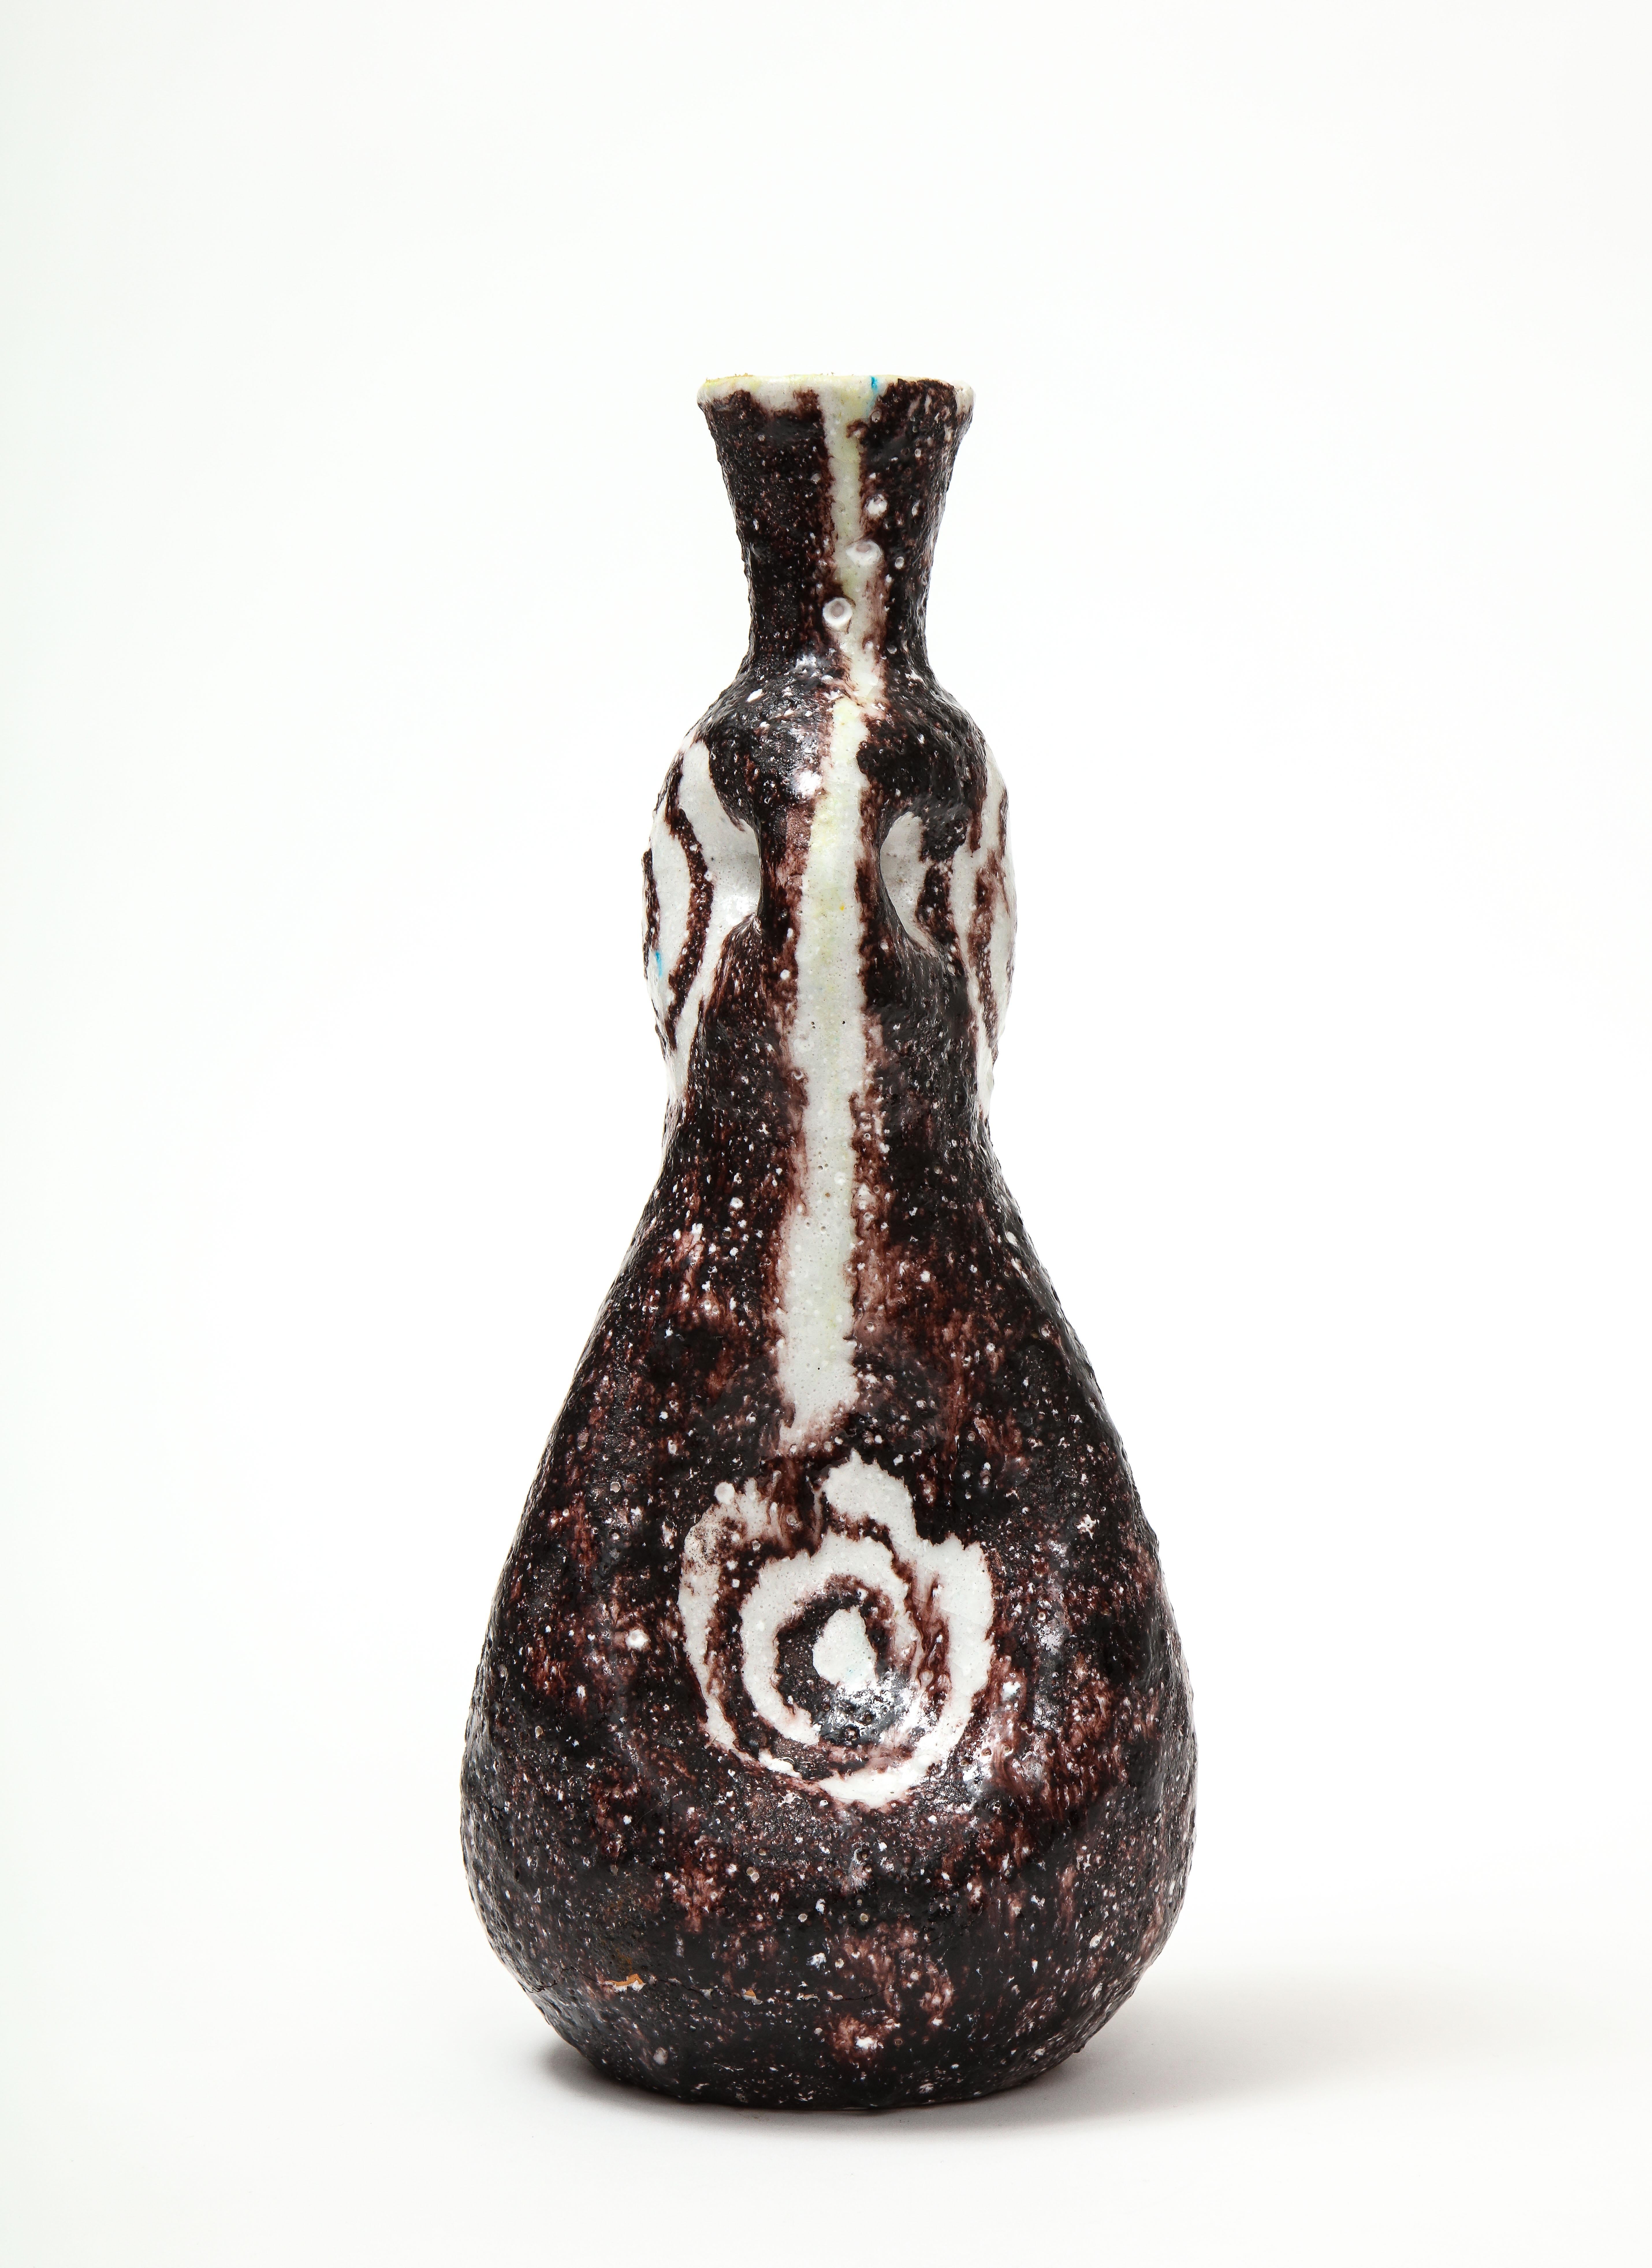 Signed ceramic vase by Salvatore Procida, Vietri Sul Mare, Italy, circa 1950.